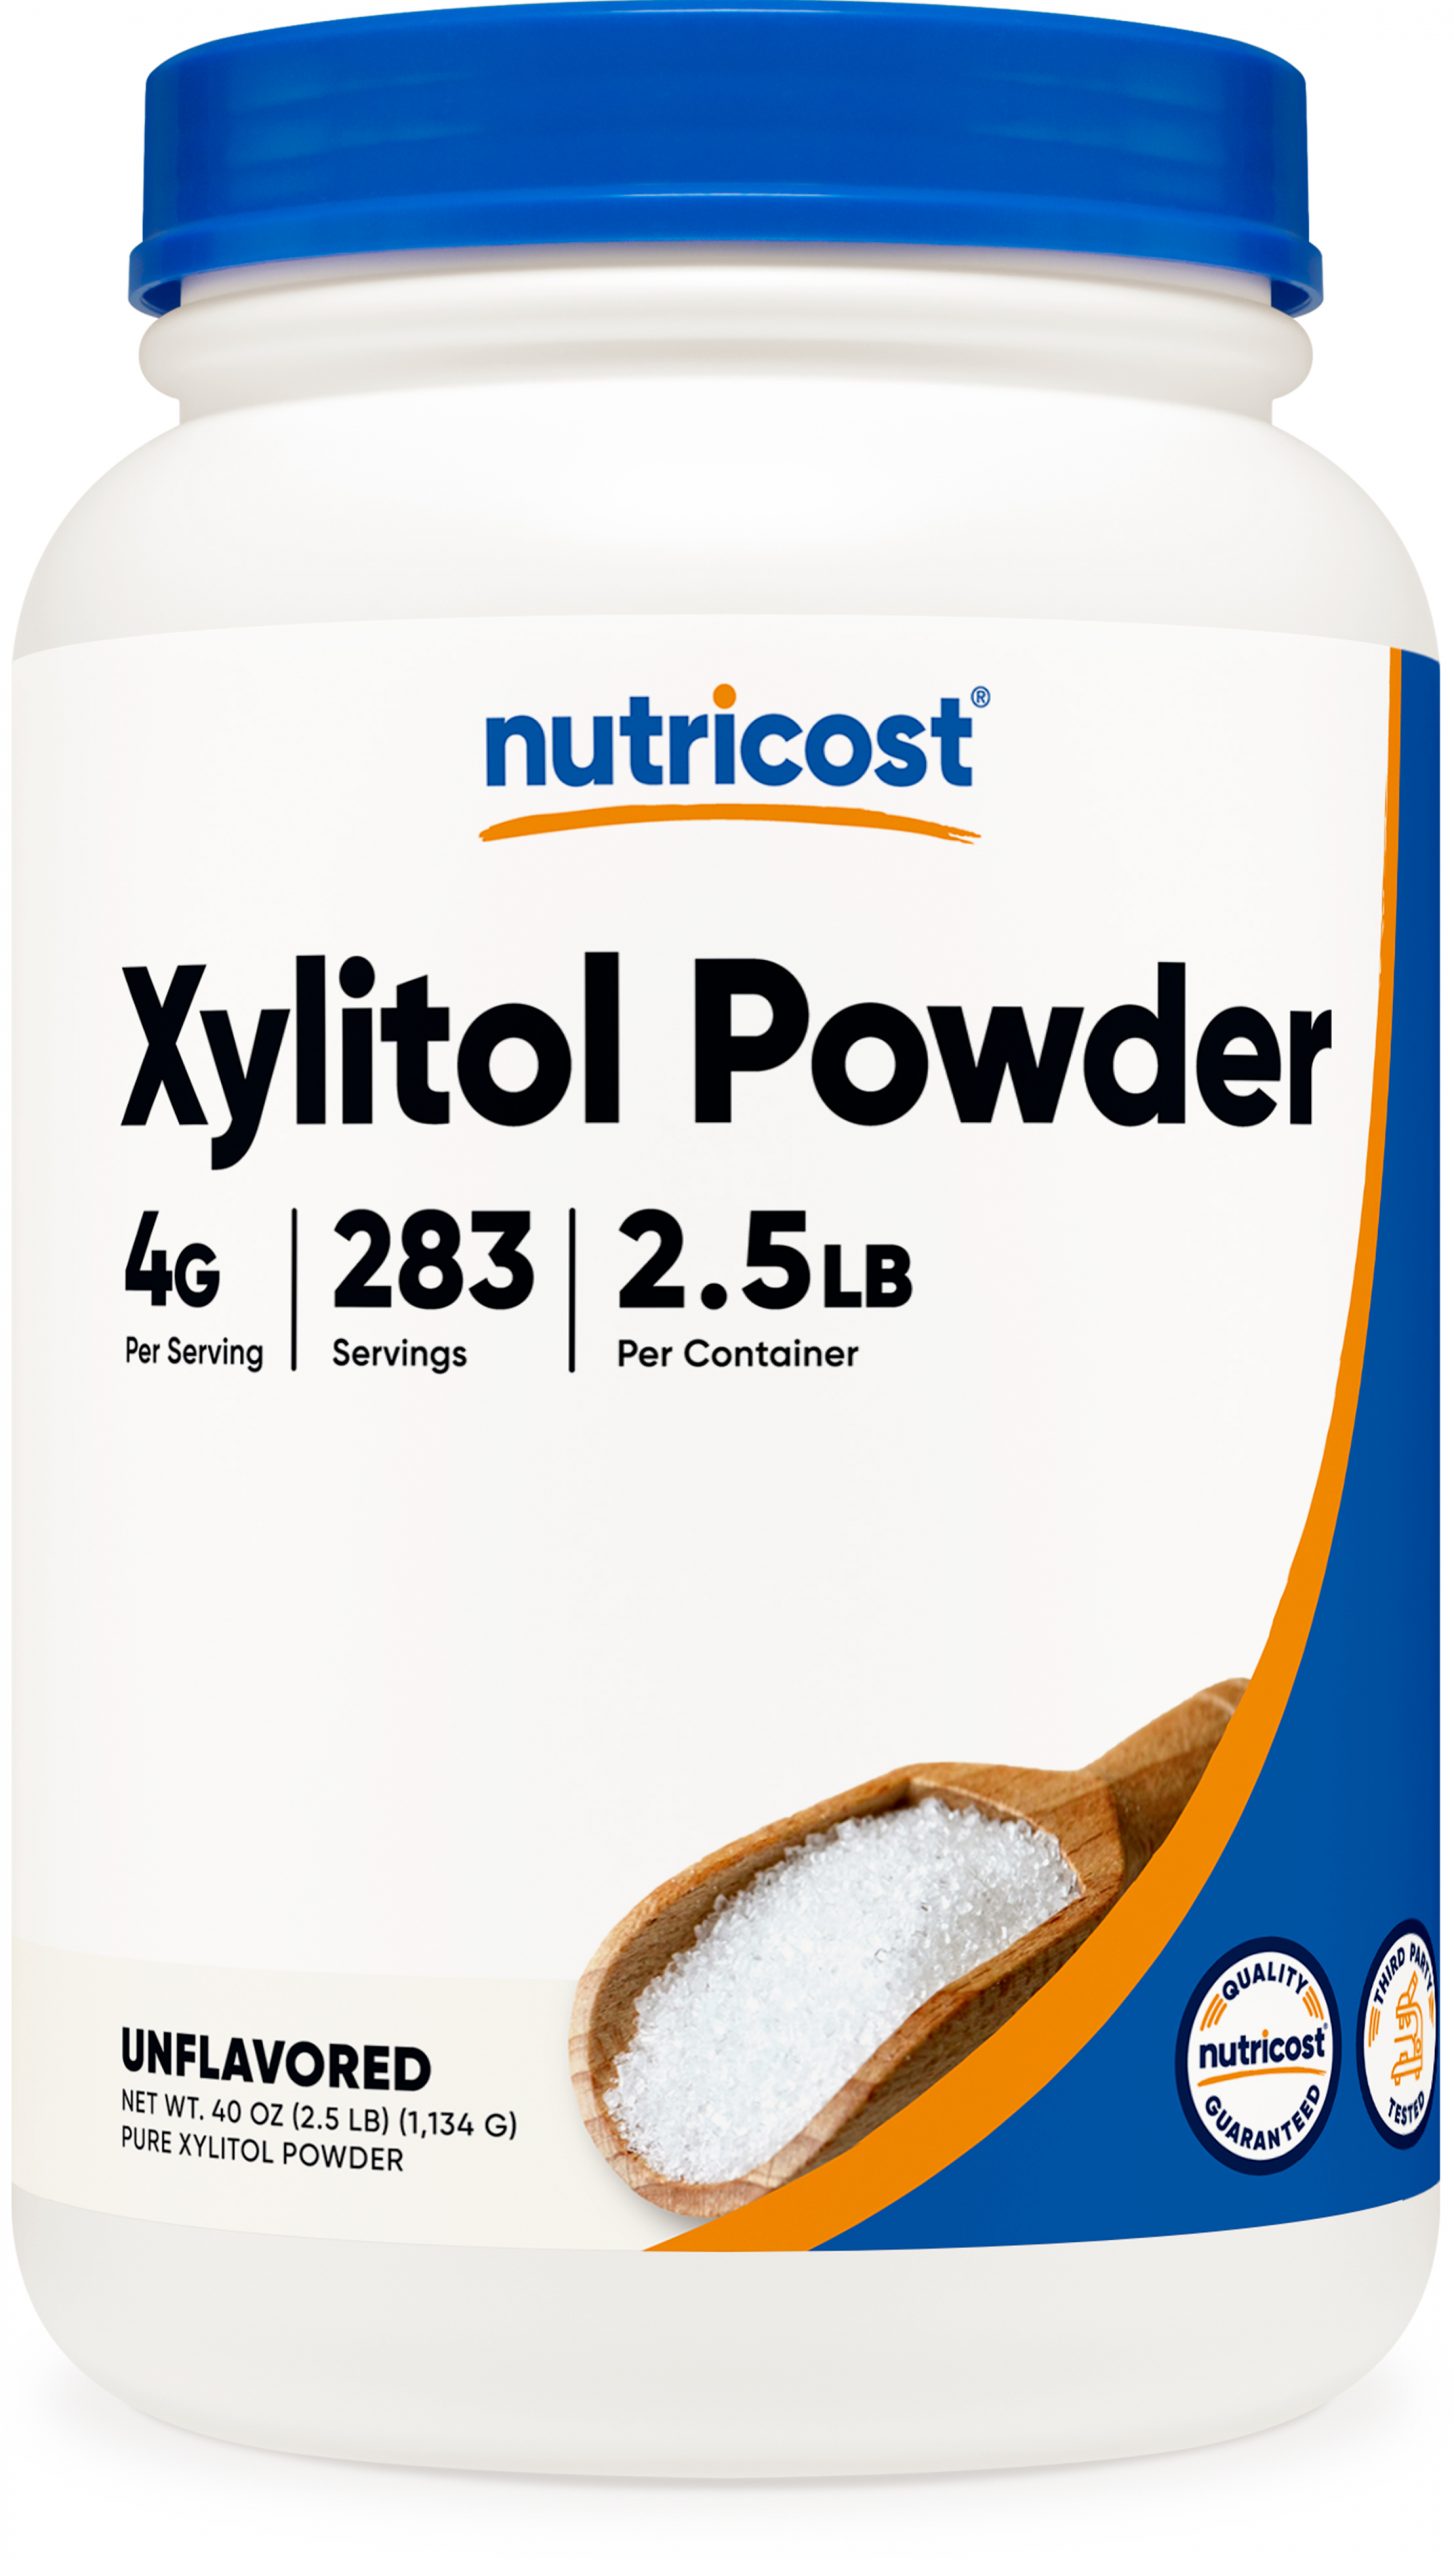 nutricost xylitol powder bottle